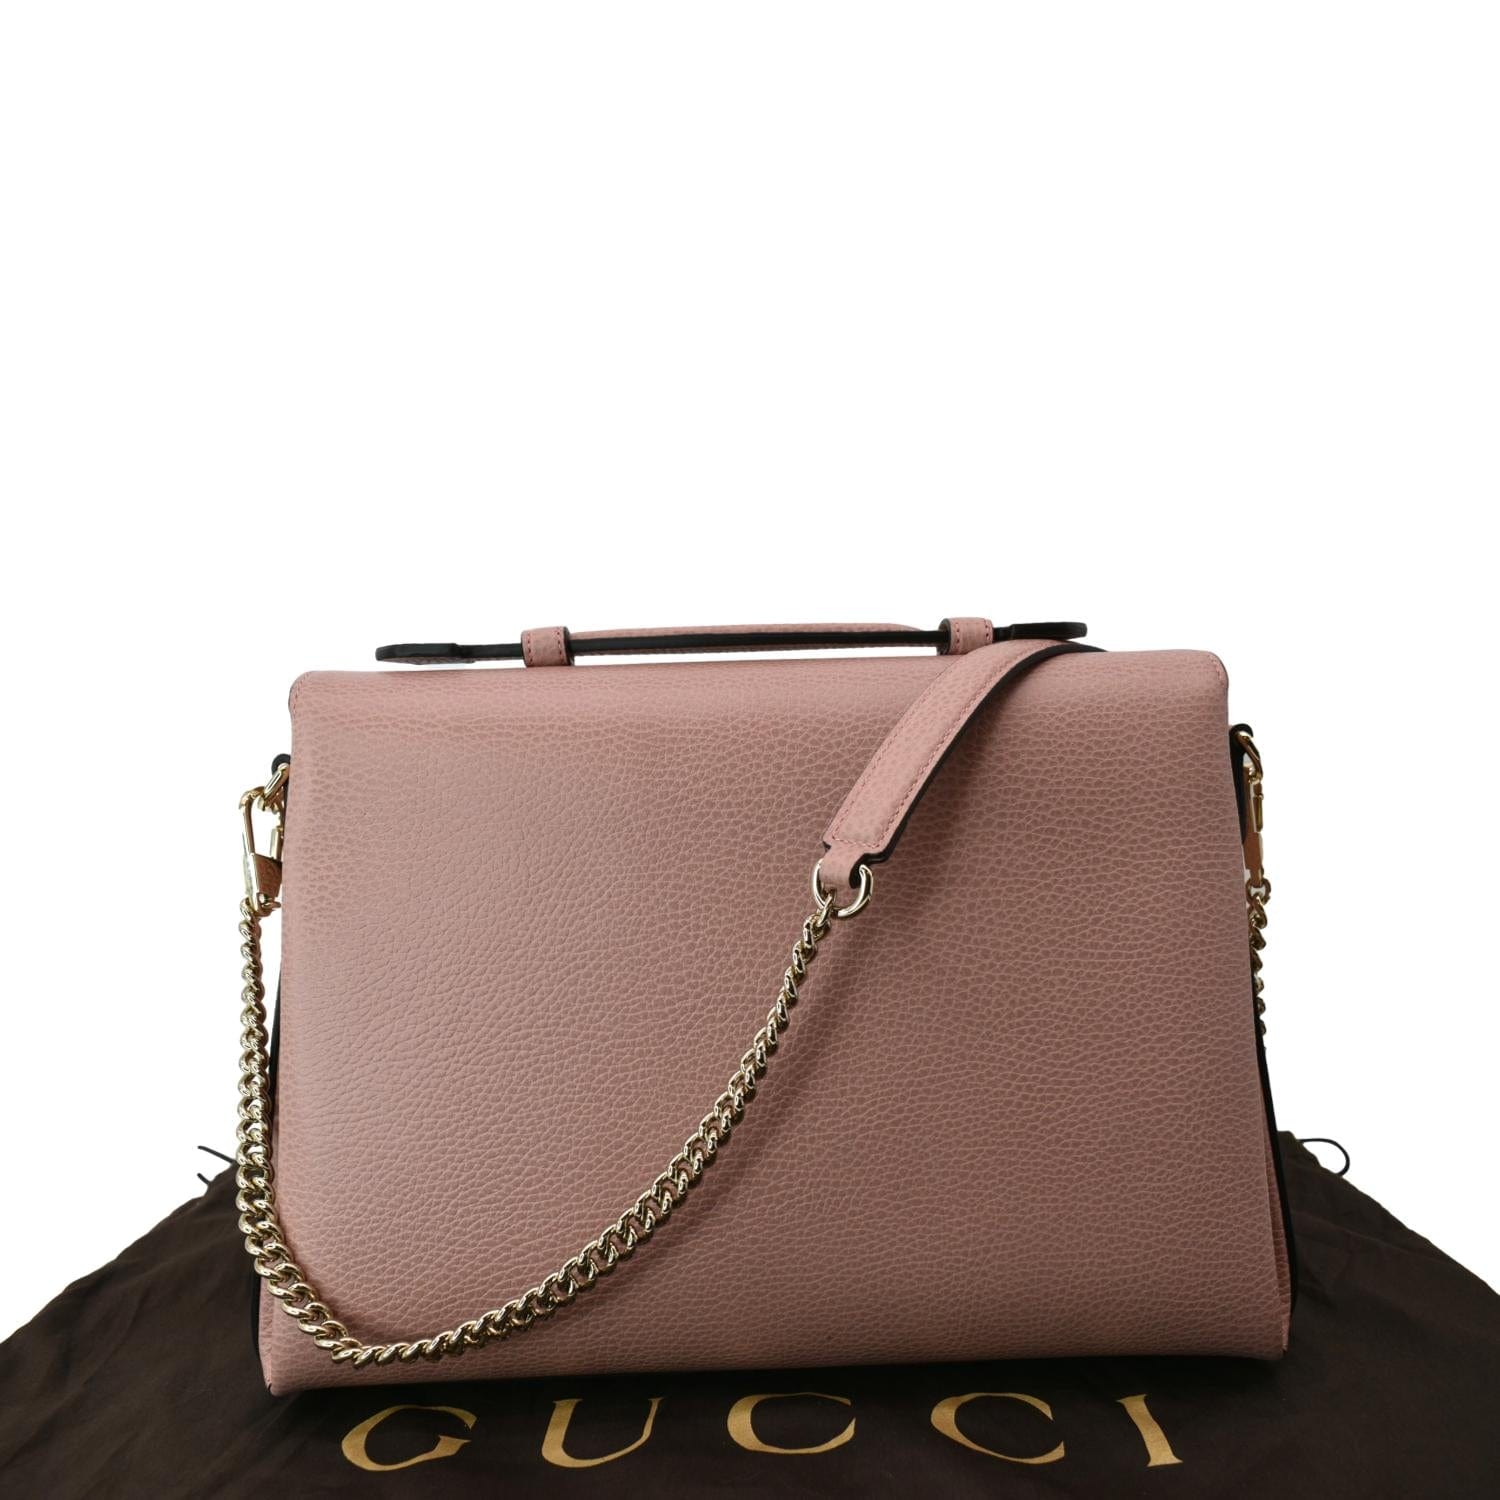 Gucci Interlocking G Medium Dollar Shoulder Bag